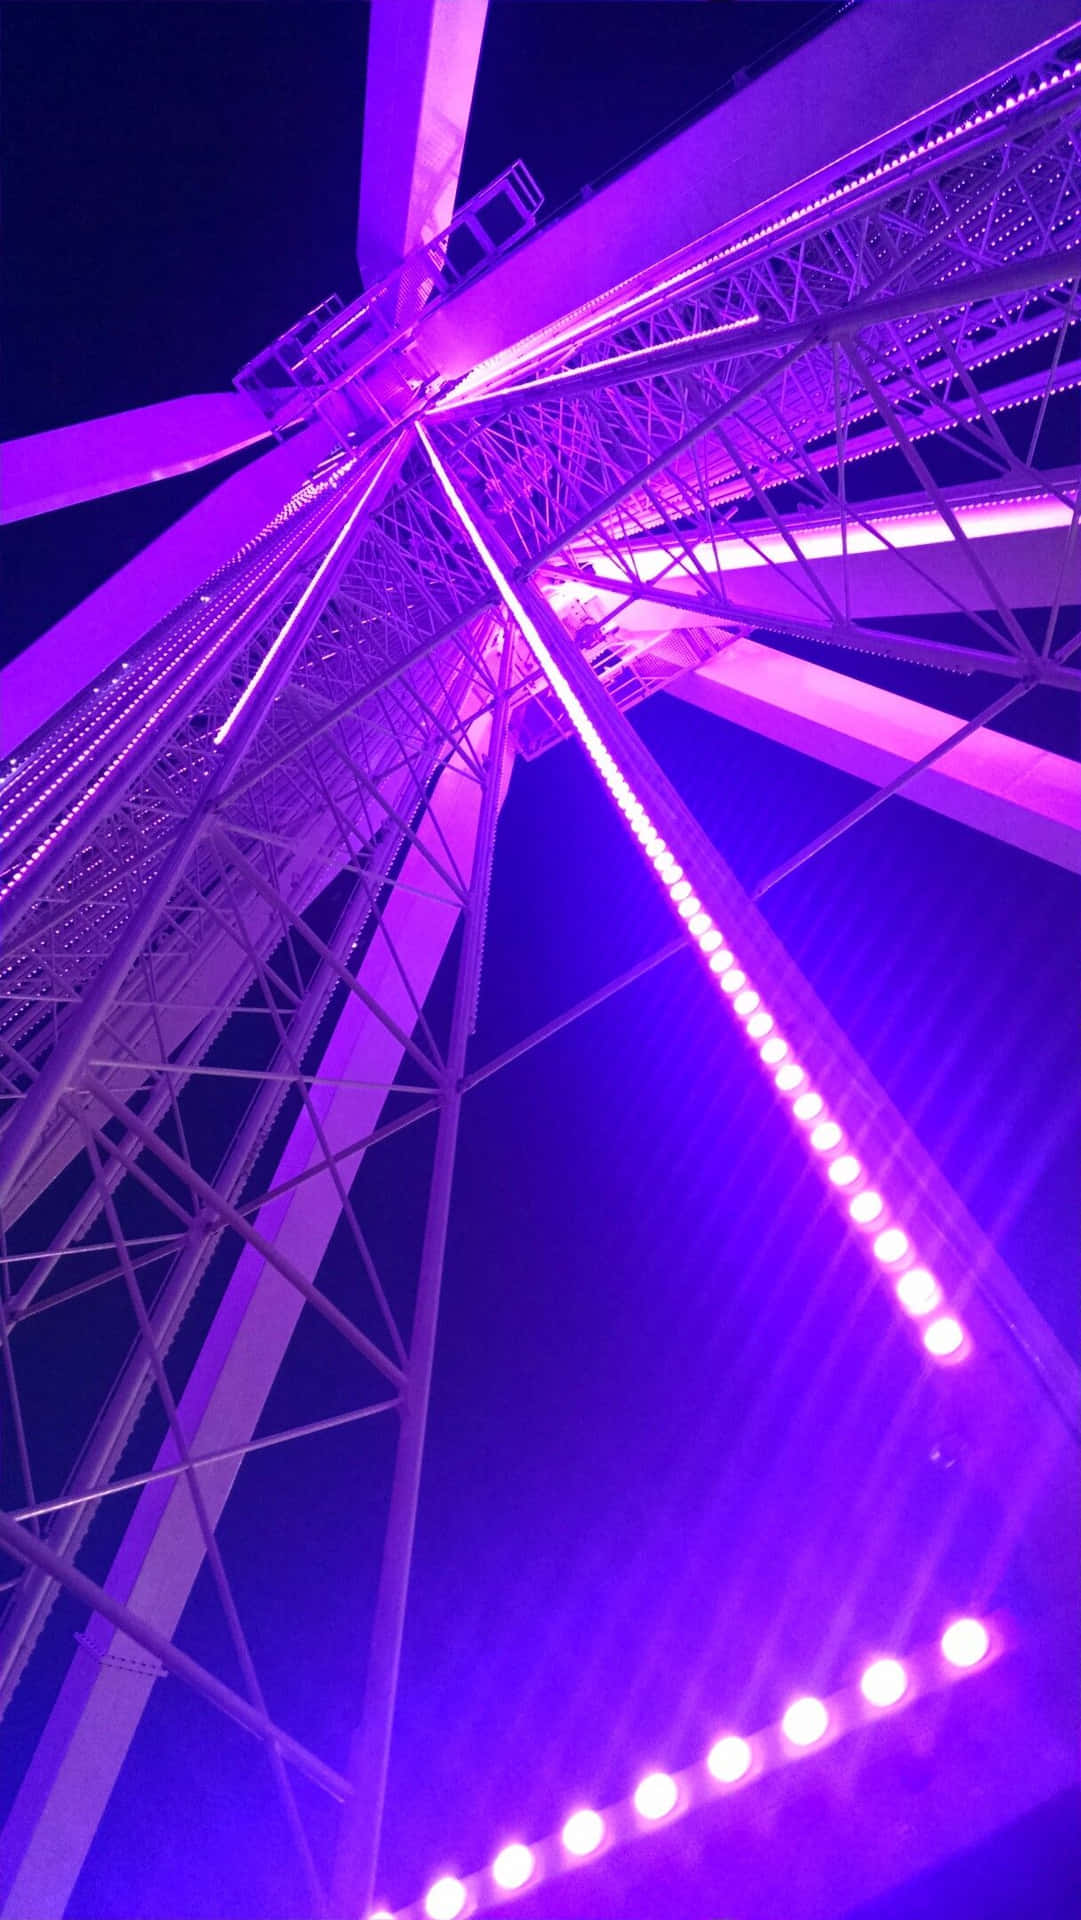 Lilaestetisk Bild Av Pariserhjulet Med Lys På Natten